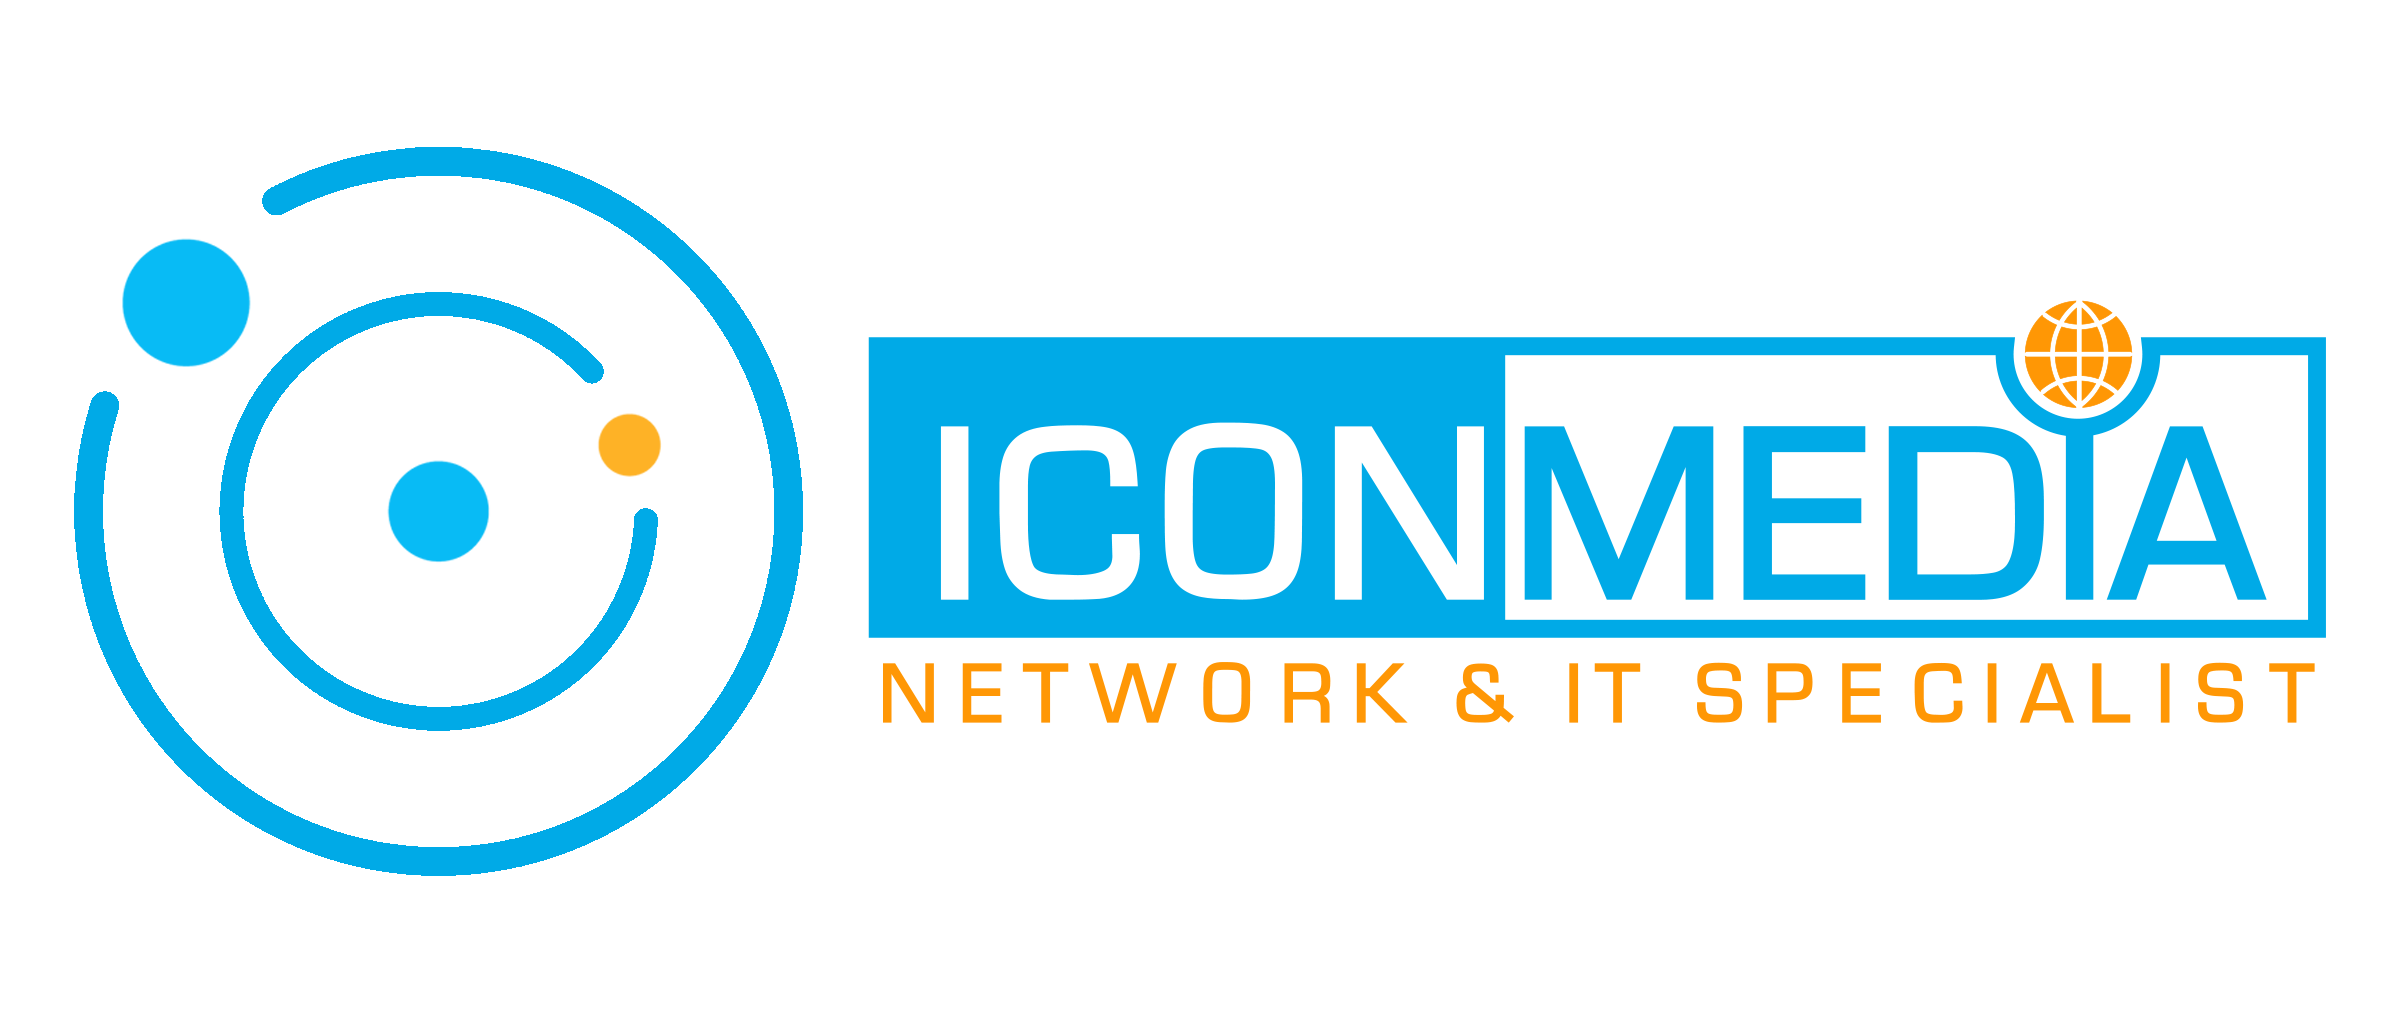 Iconmedia